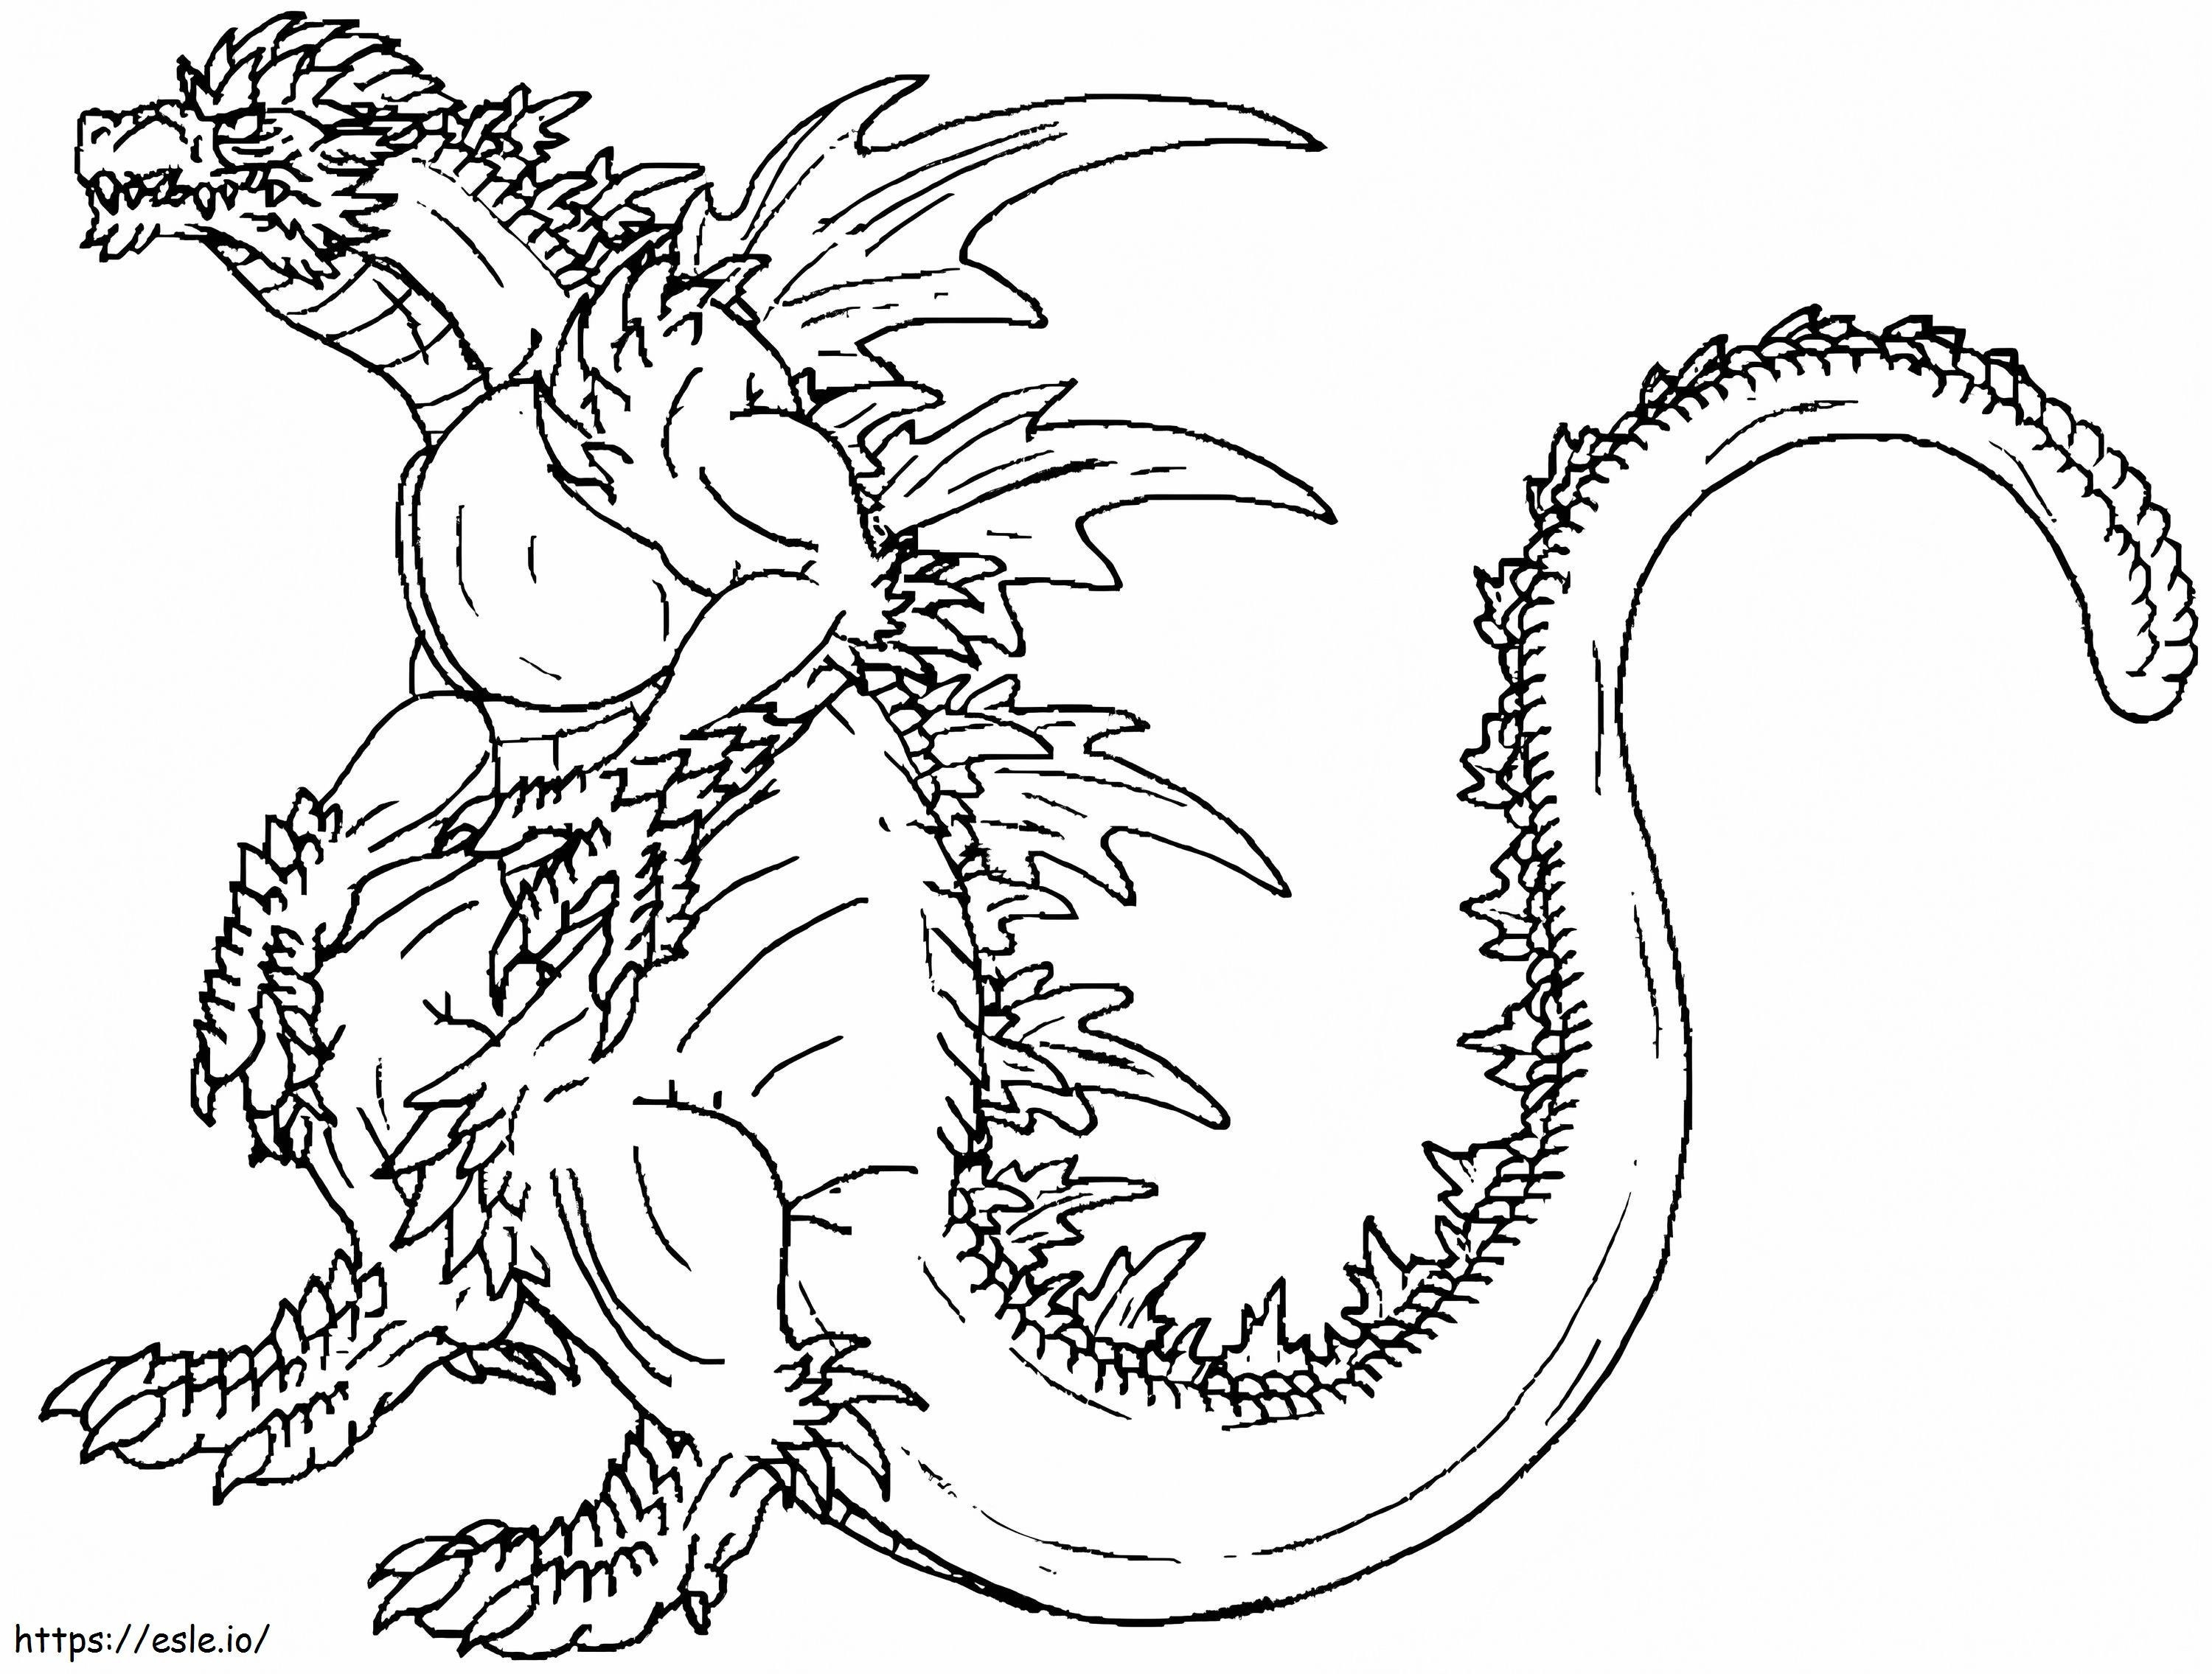 Big Godzilla coloring page